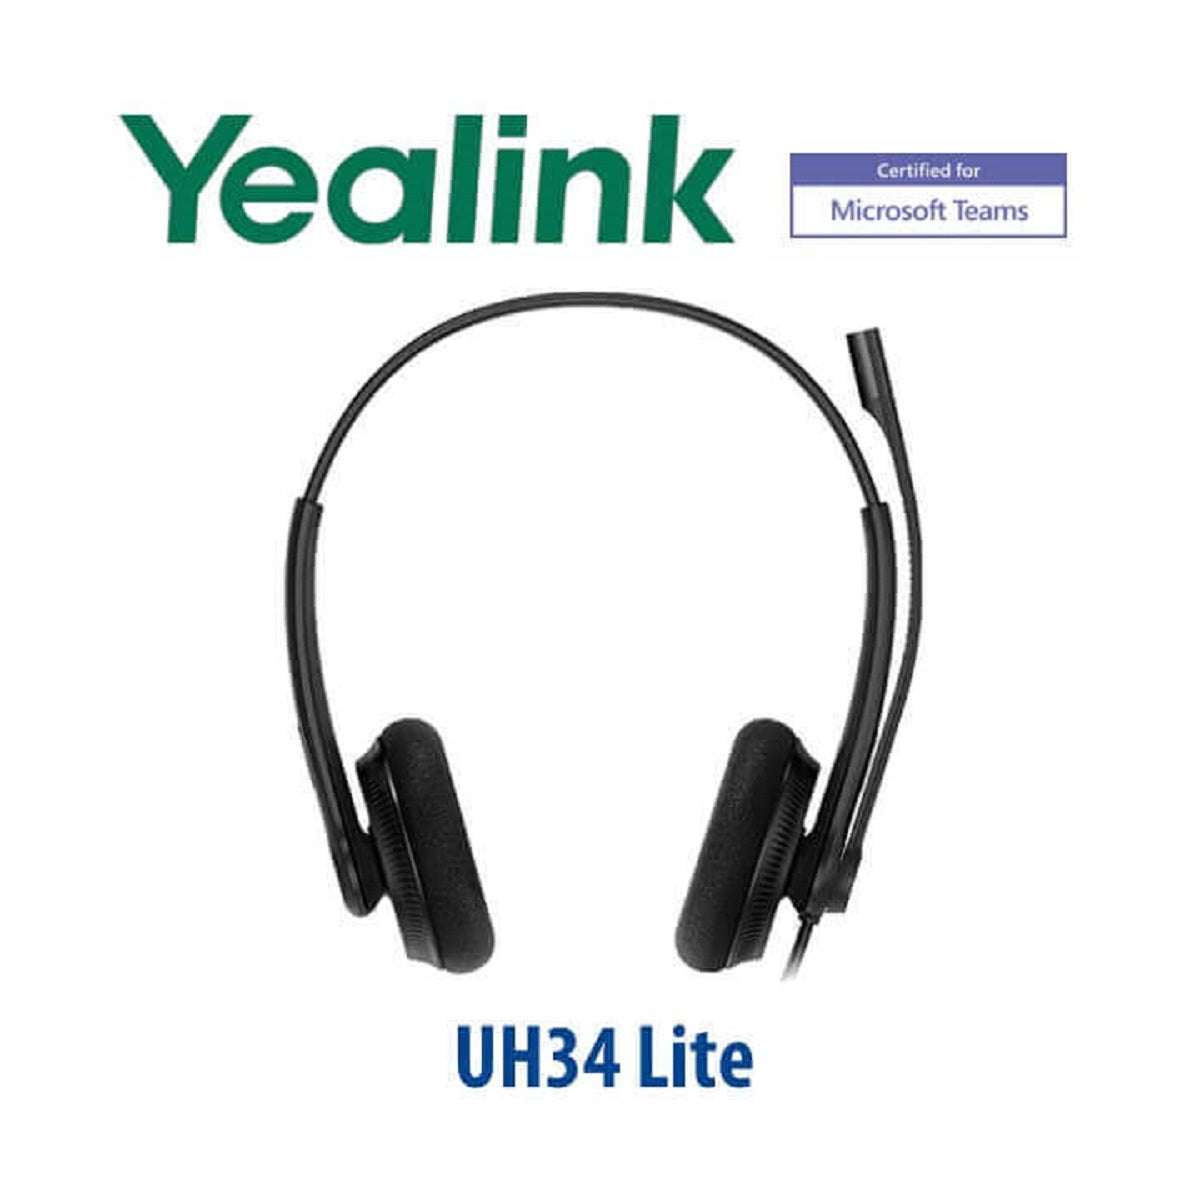 Yealink UH34 Lite Microsoft Teams Over-the-Head Binaural Headset (USB-A)